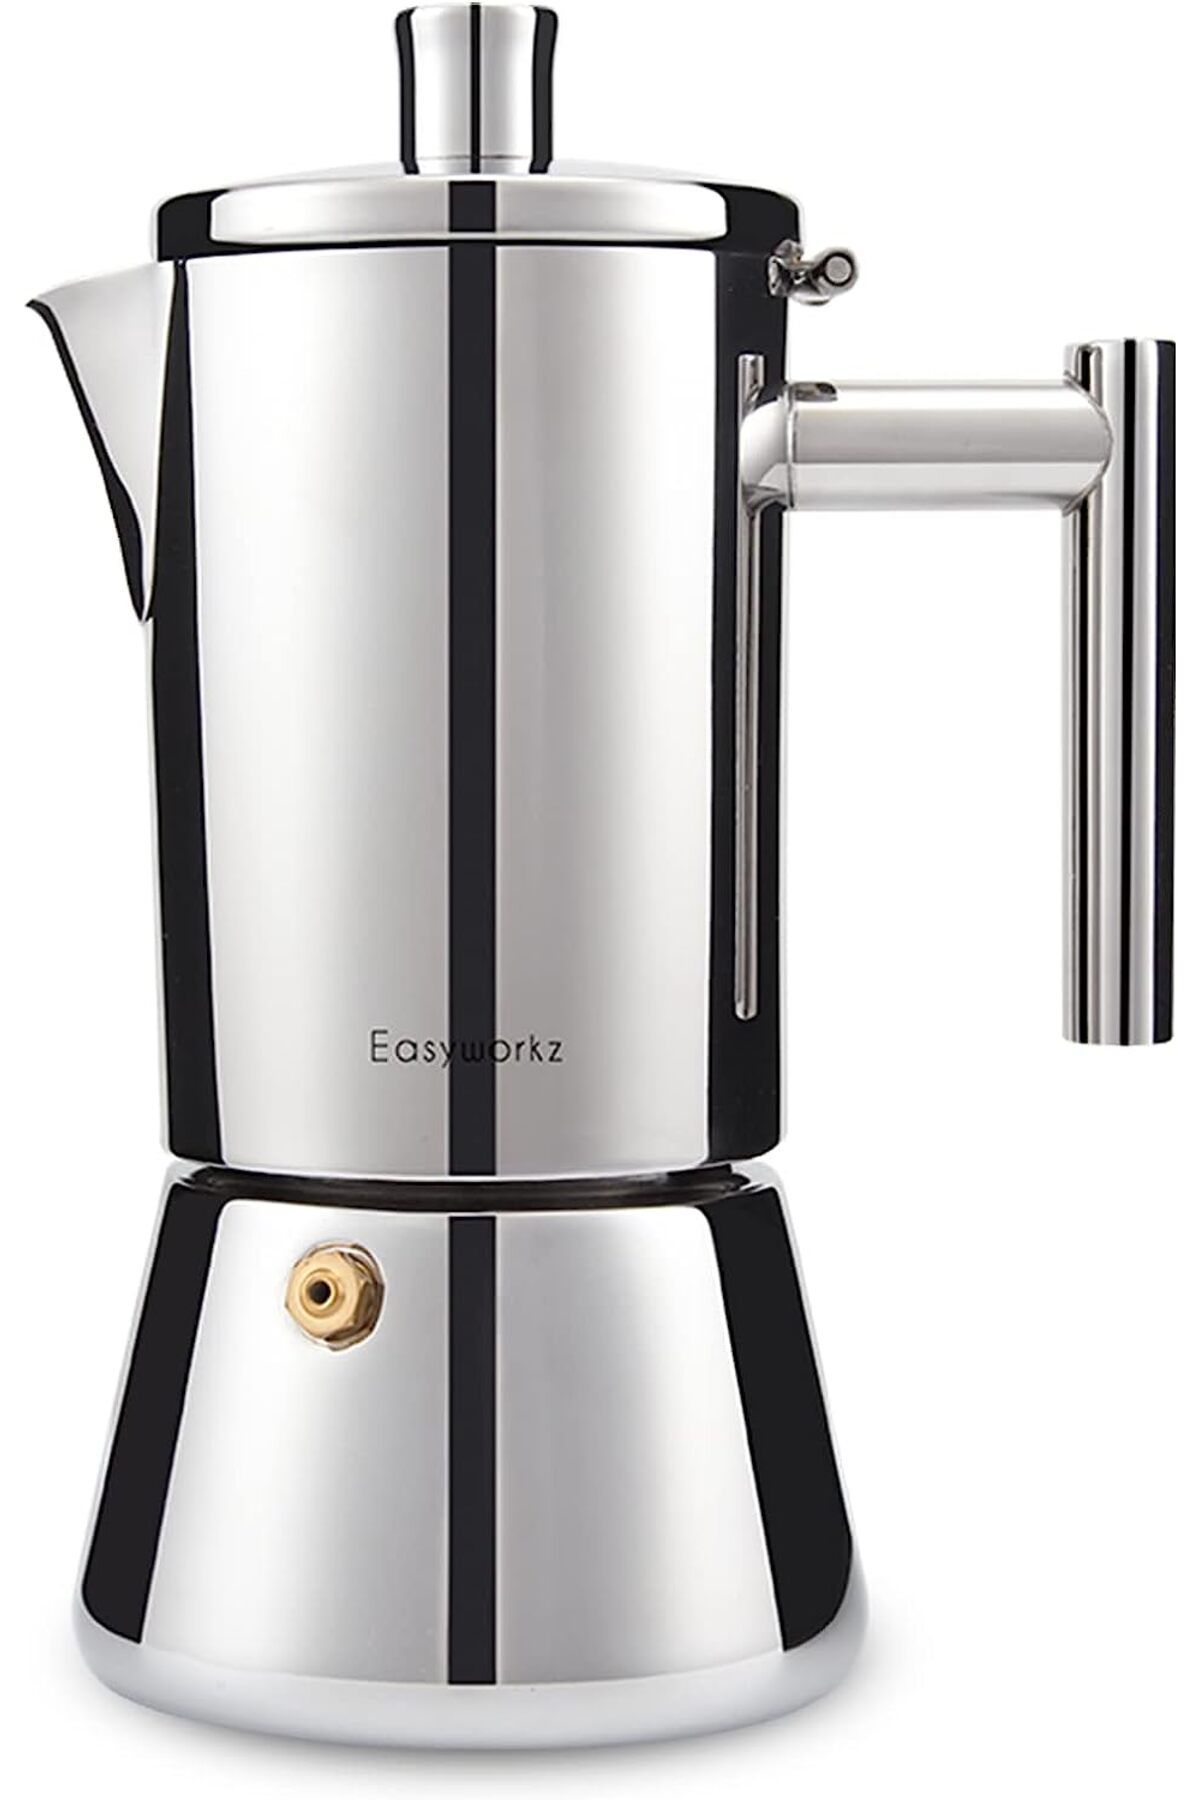 Franco Easyworkz Diego Kahve makinesi Espresso makinesi İtalyan Paslanmaz Çelik 6-Cup, 300 ml